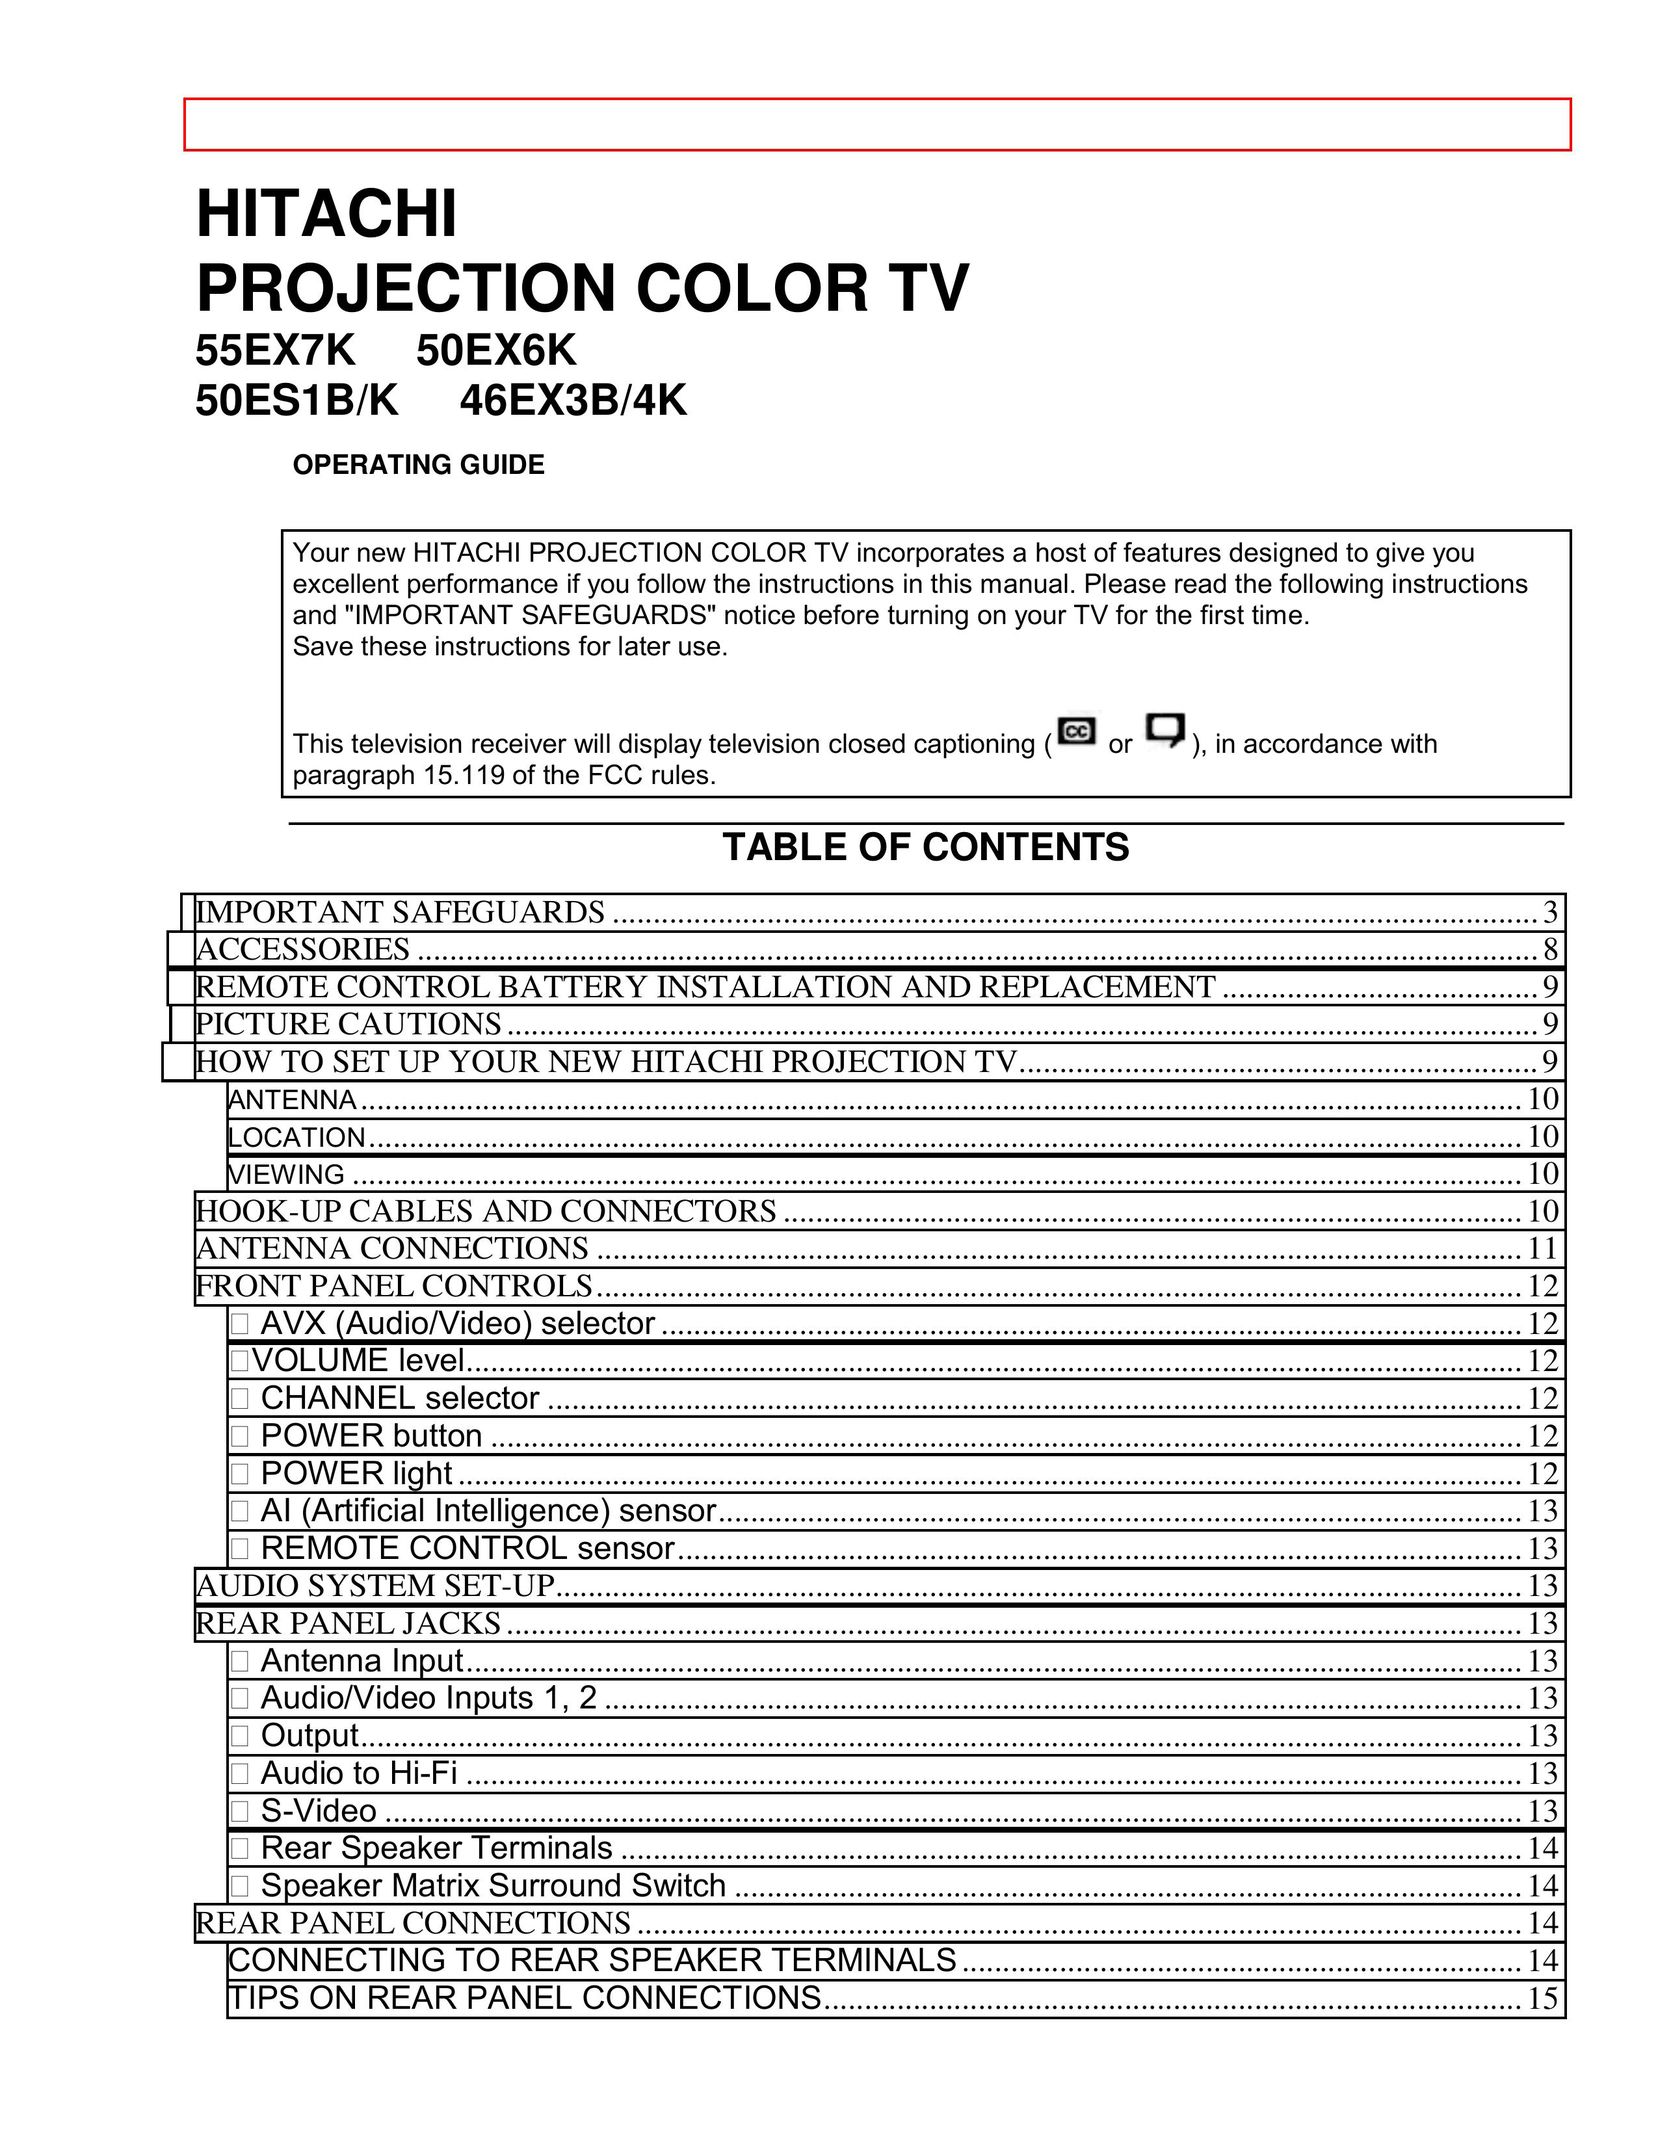 Hitachi 50ES1K Projection Television User Manual